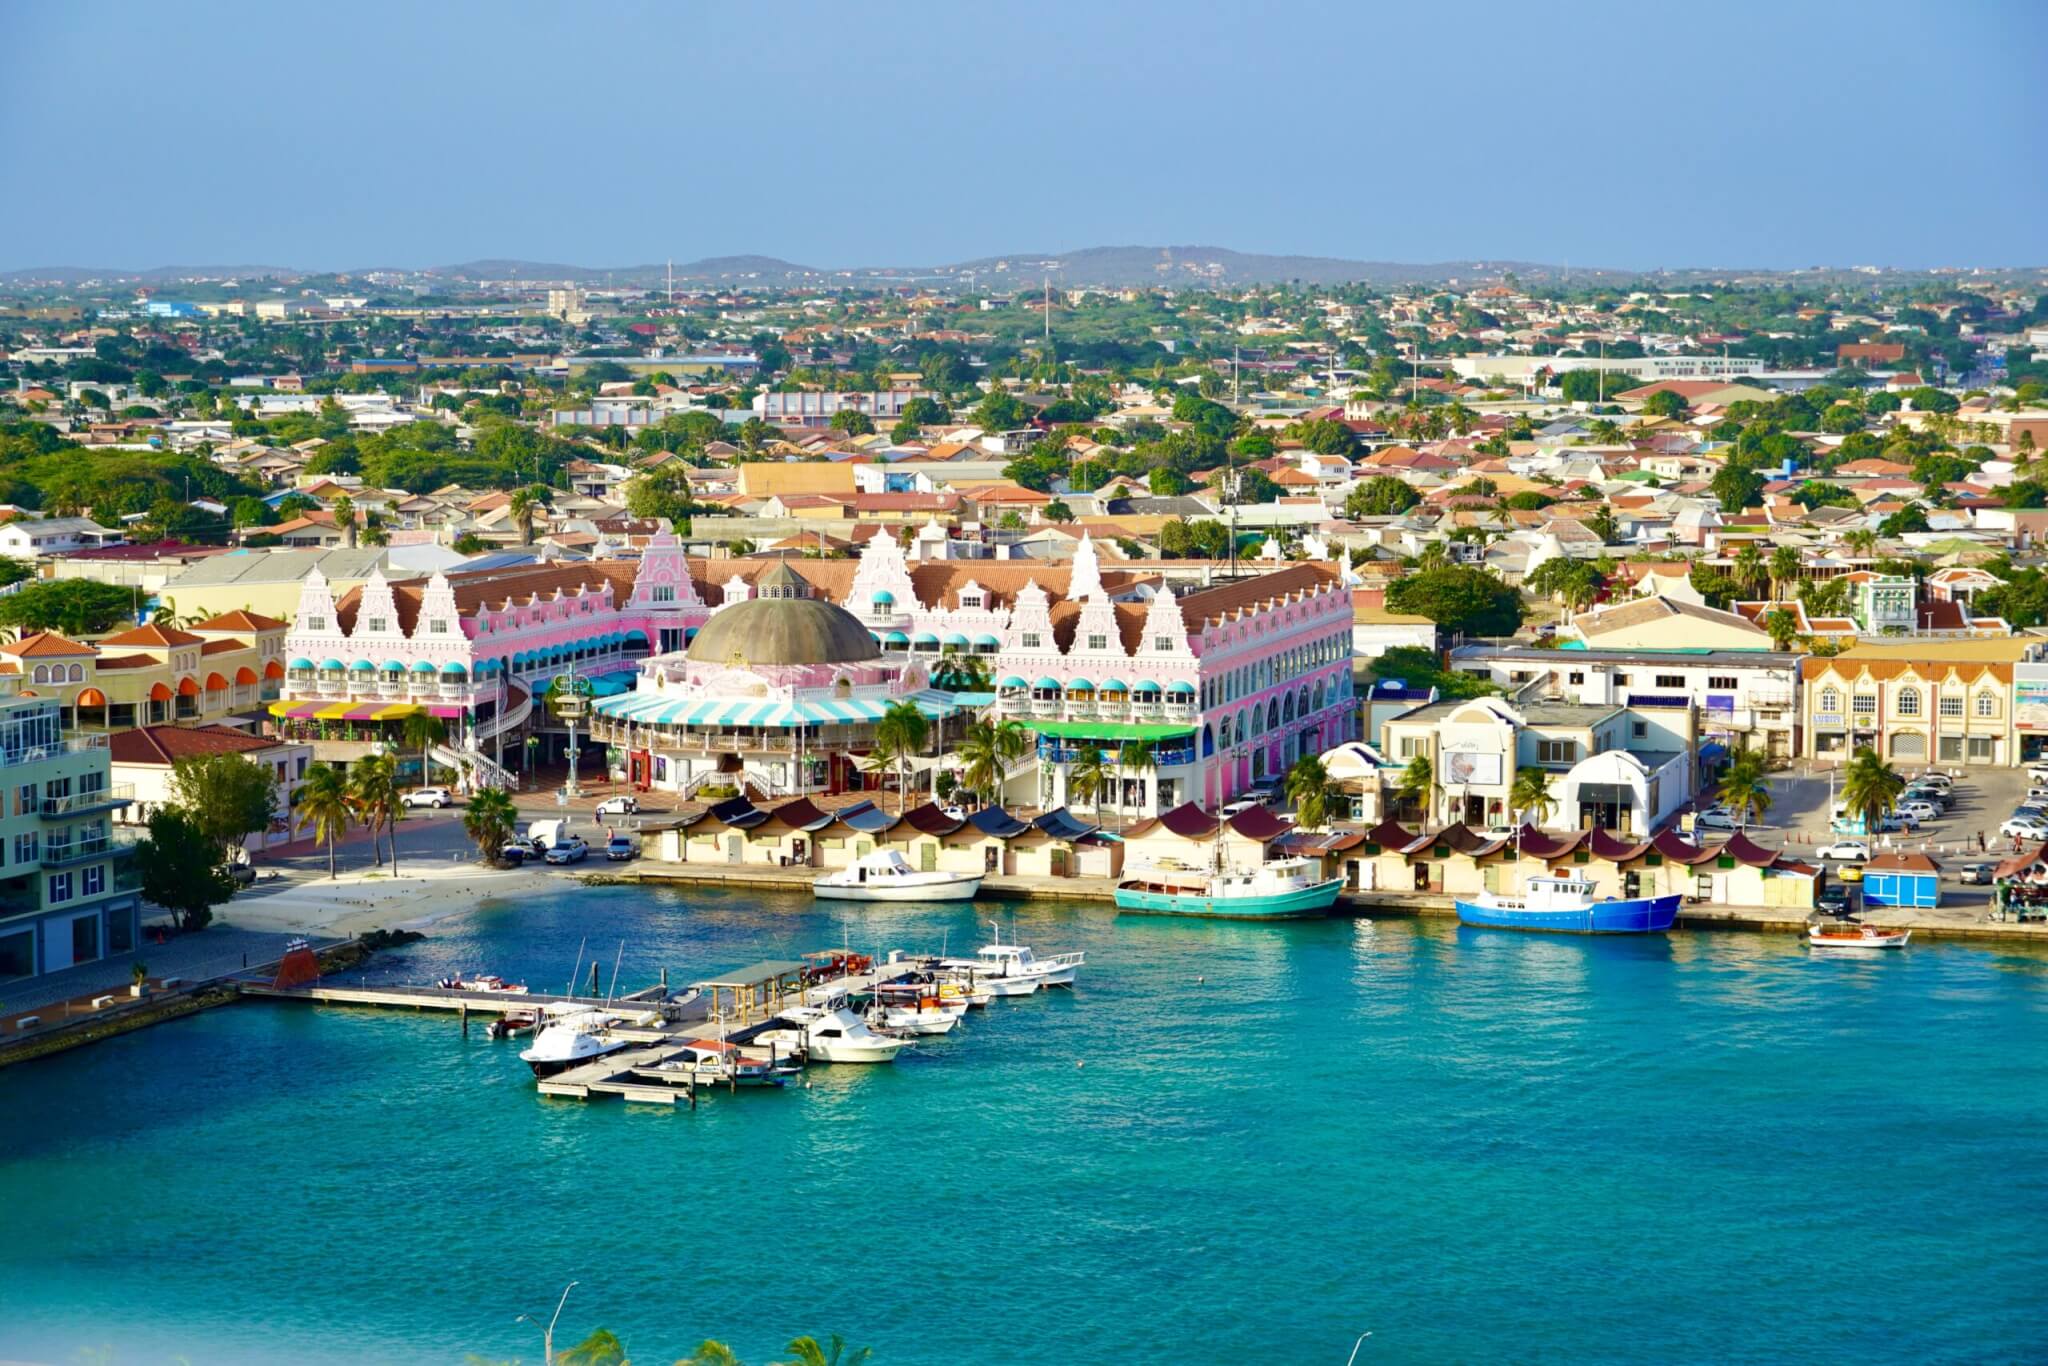 The Waterfront harbour of Oranjestad Aruba